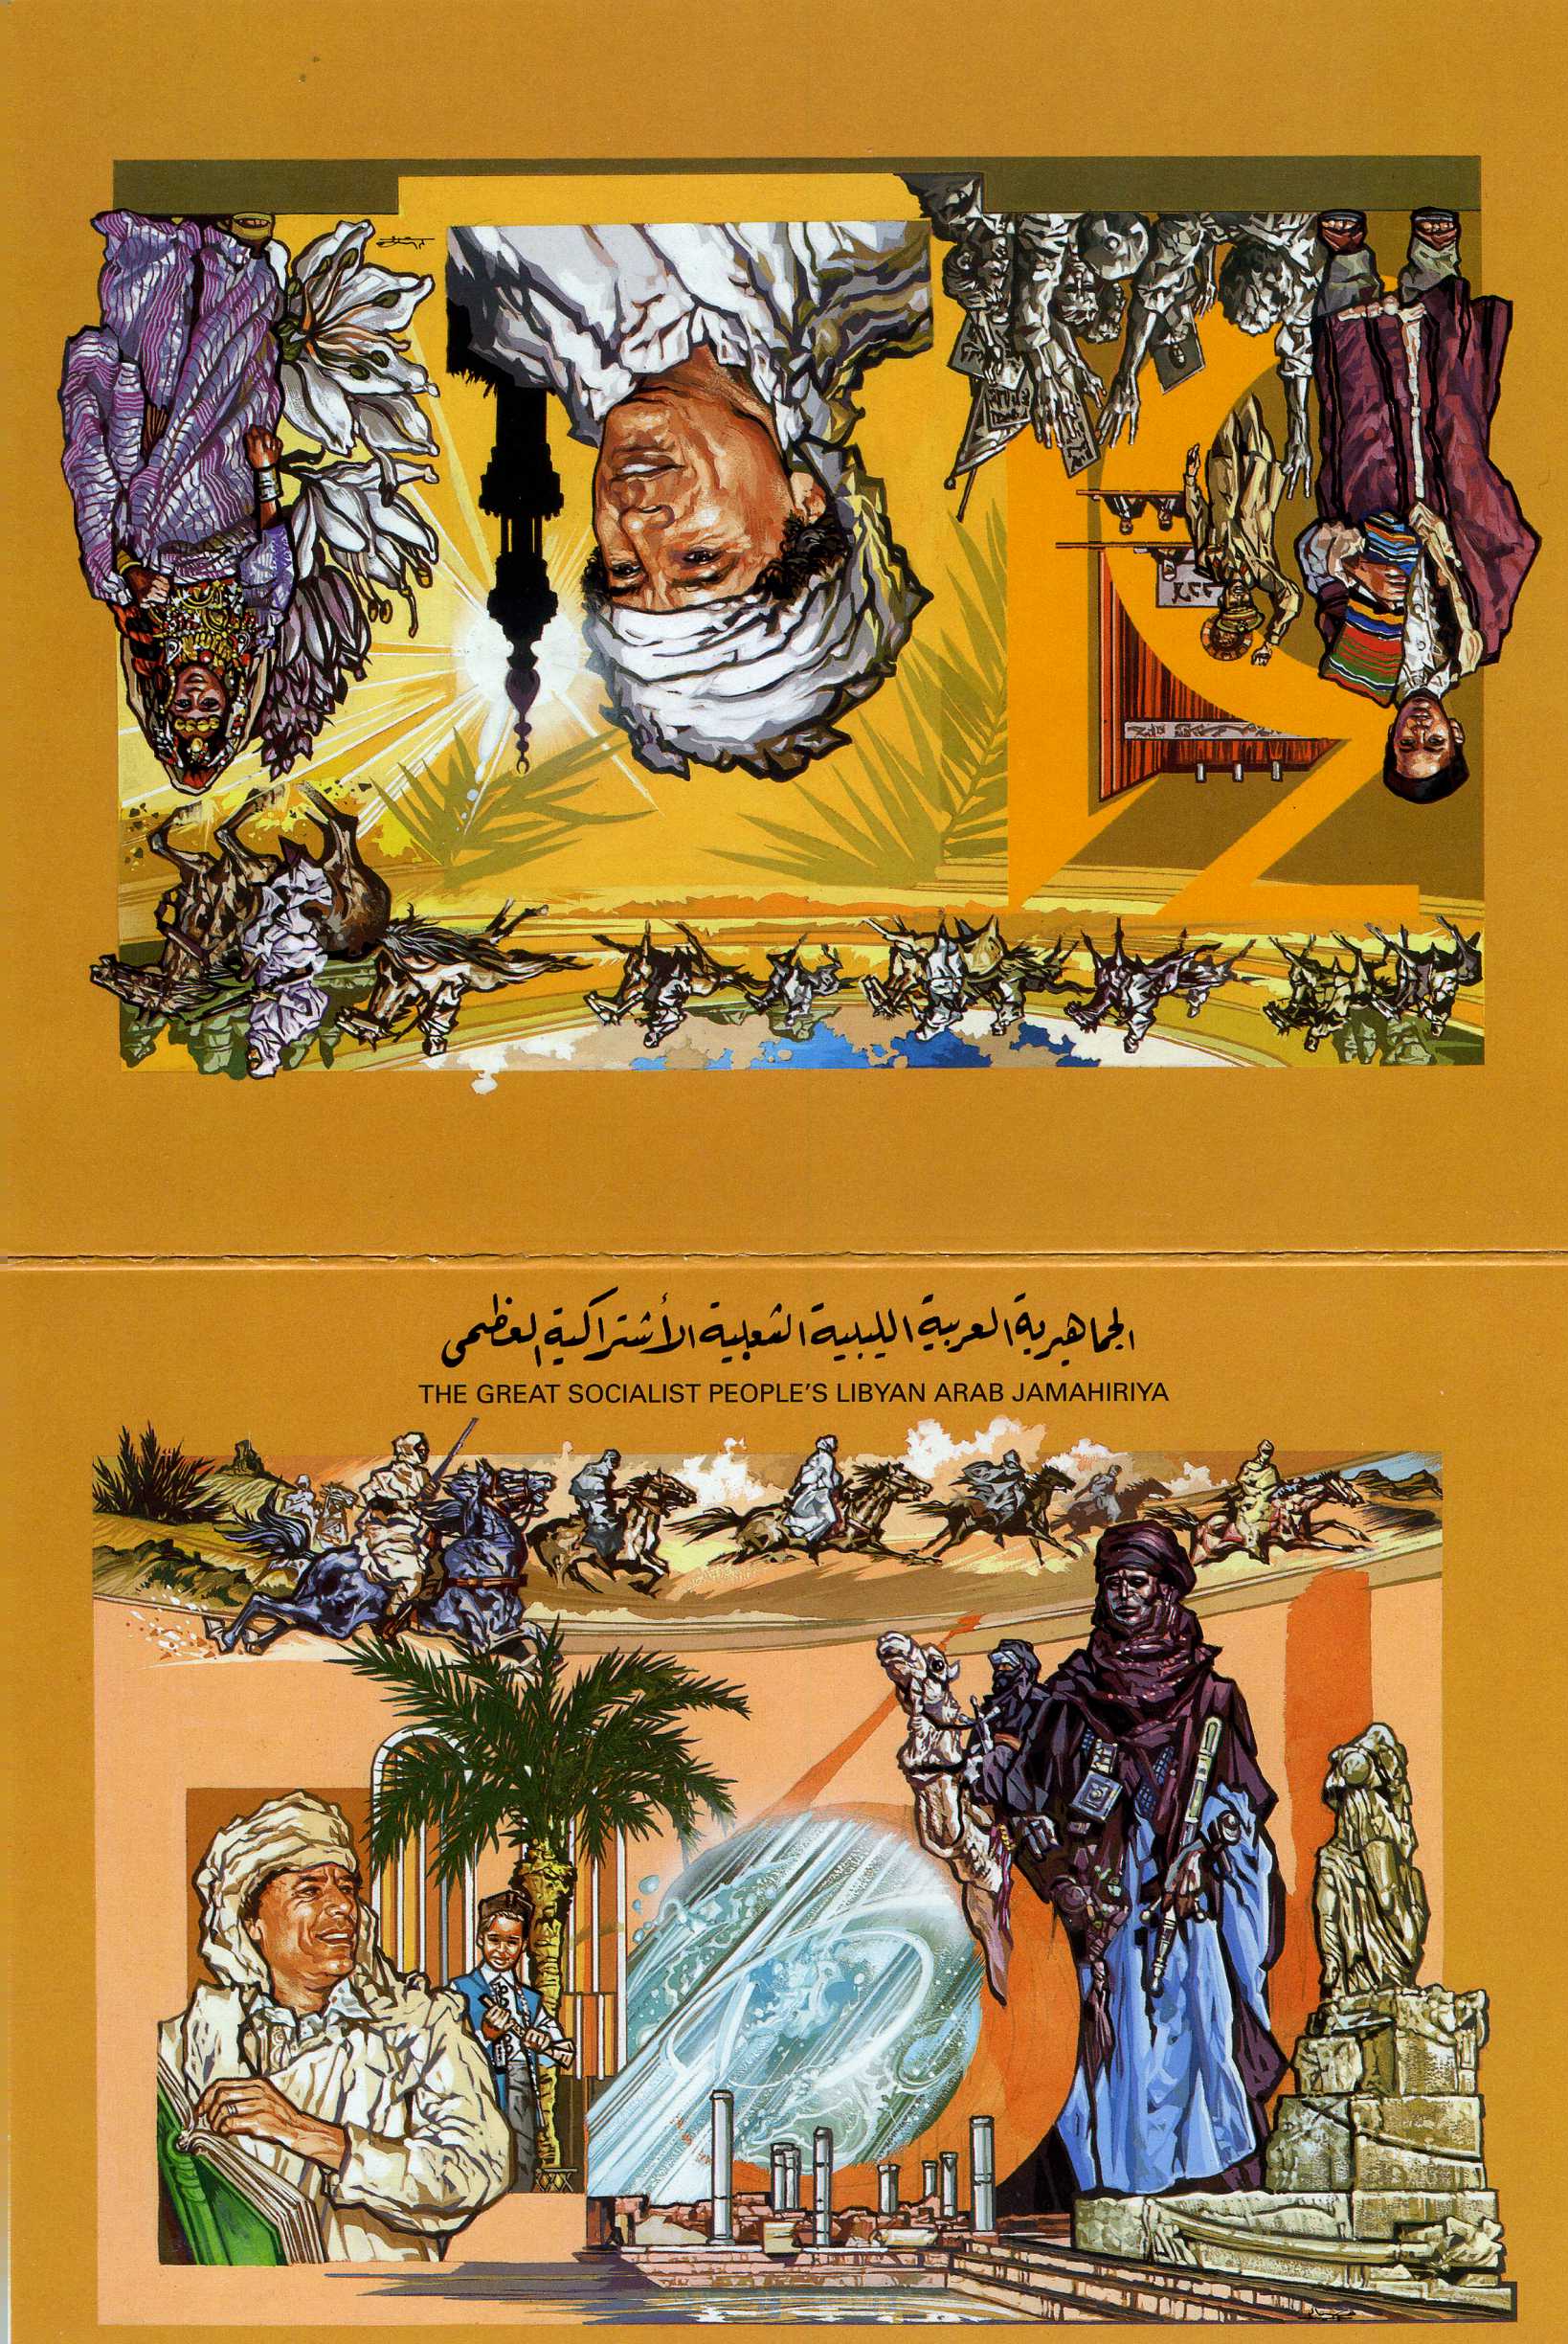 Libya stamp sheet cover. Colonel Gaddhafi